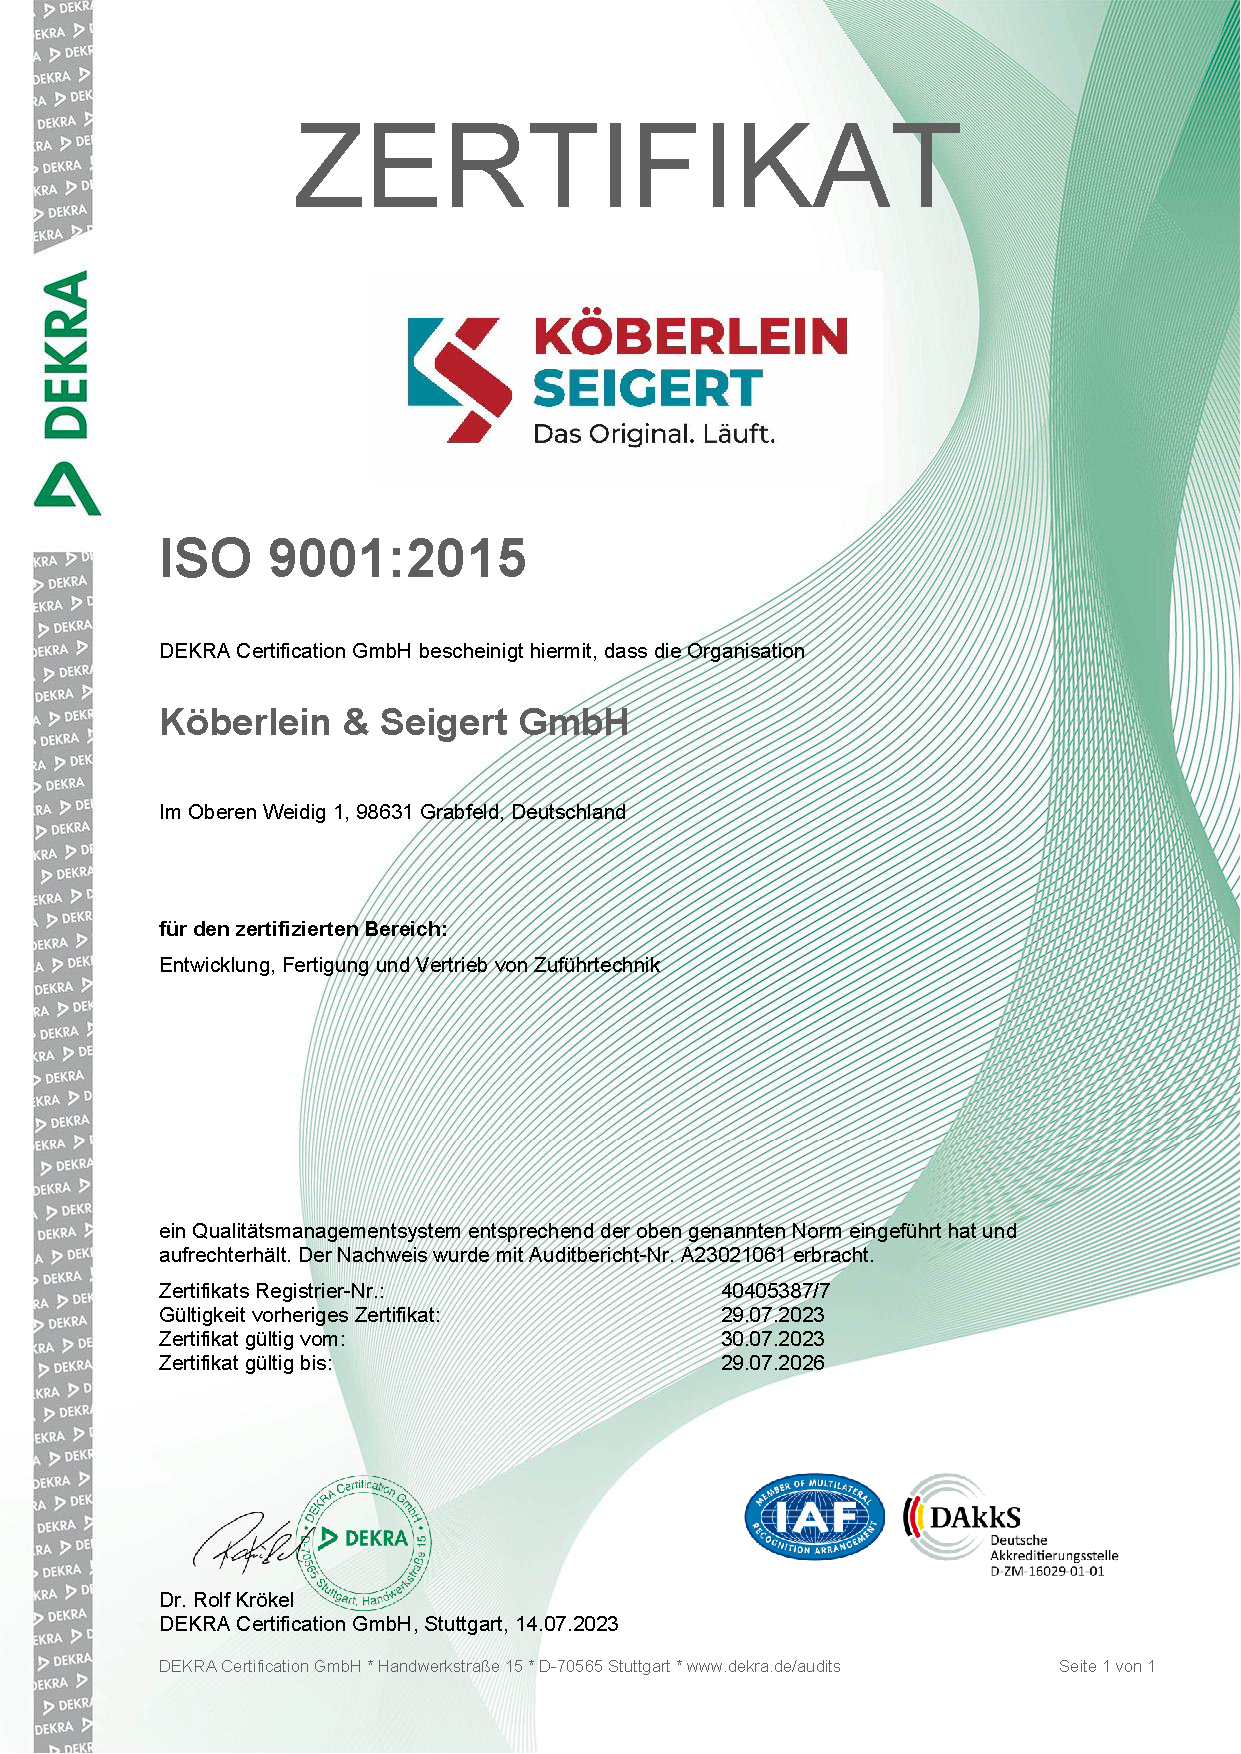 Award: Zertifikat ISO 9001:2015